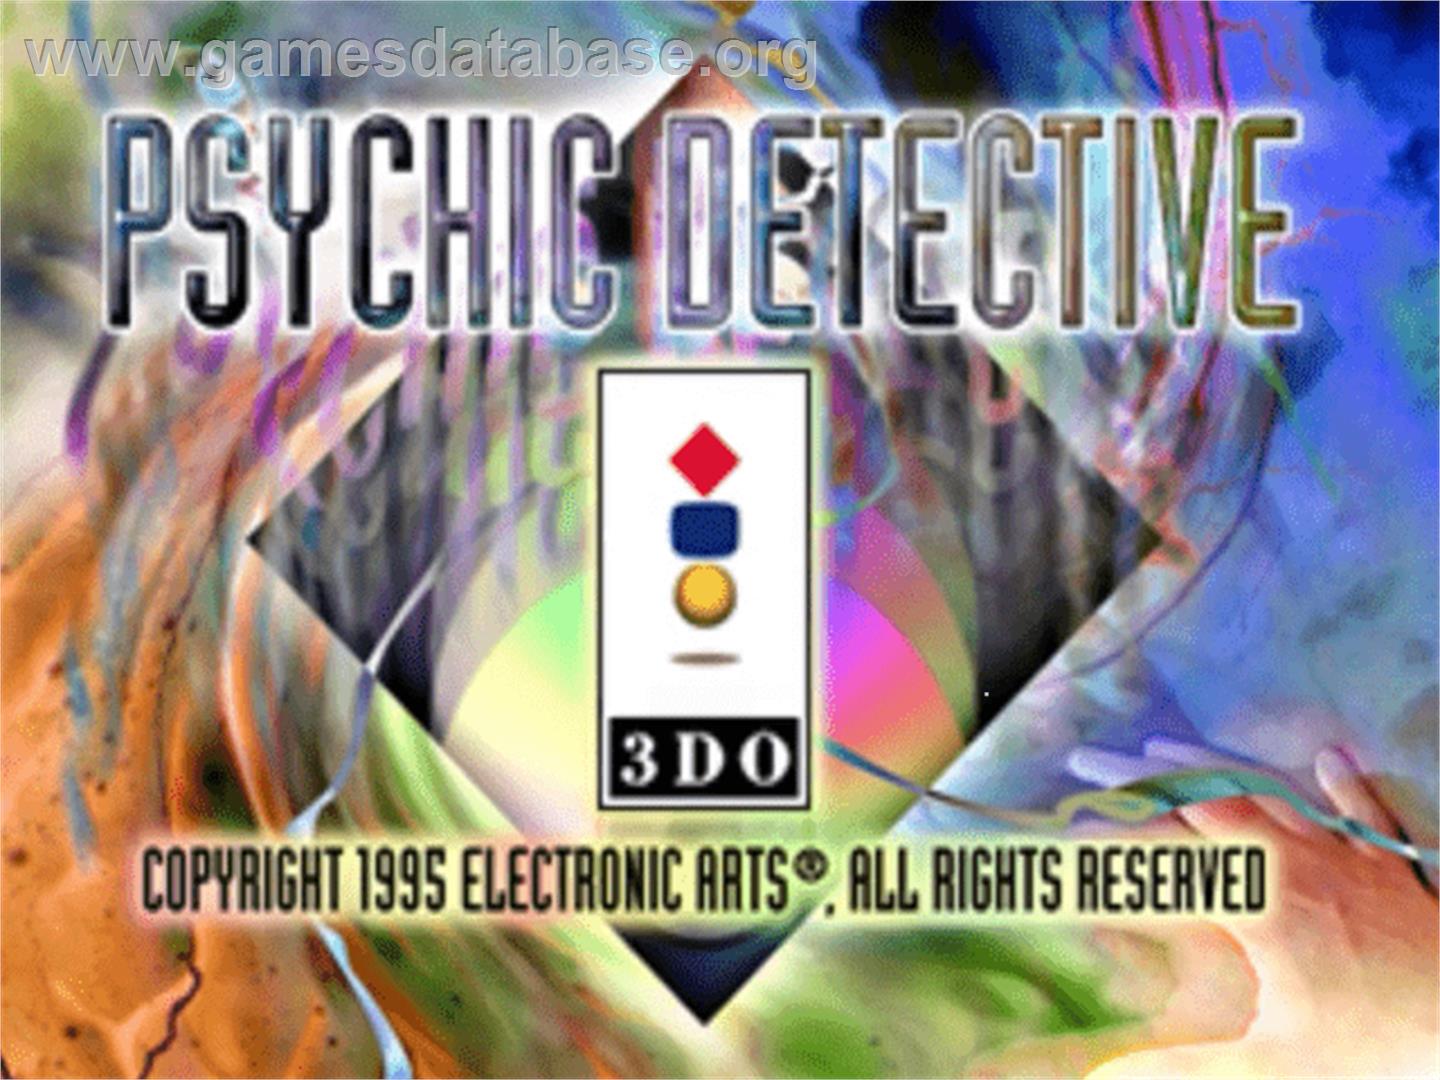 Psychic Detective - Panasonic 3DO - Artwork - Title Screen